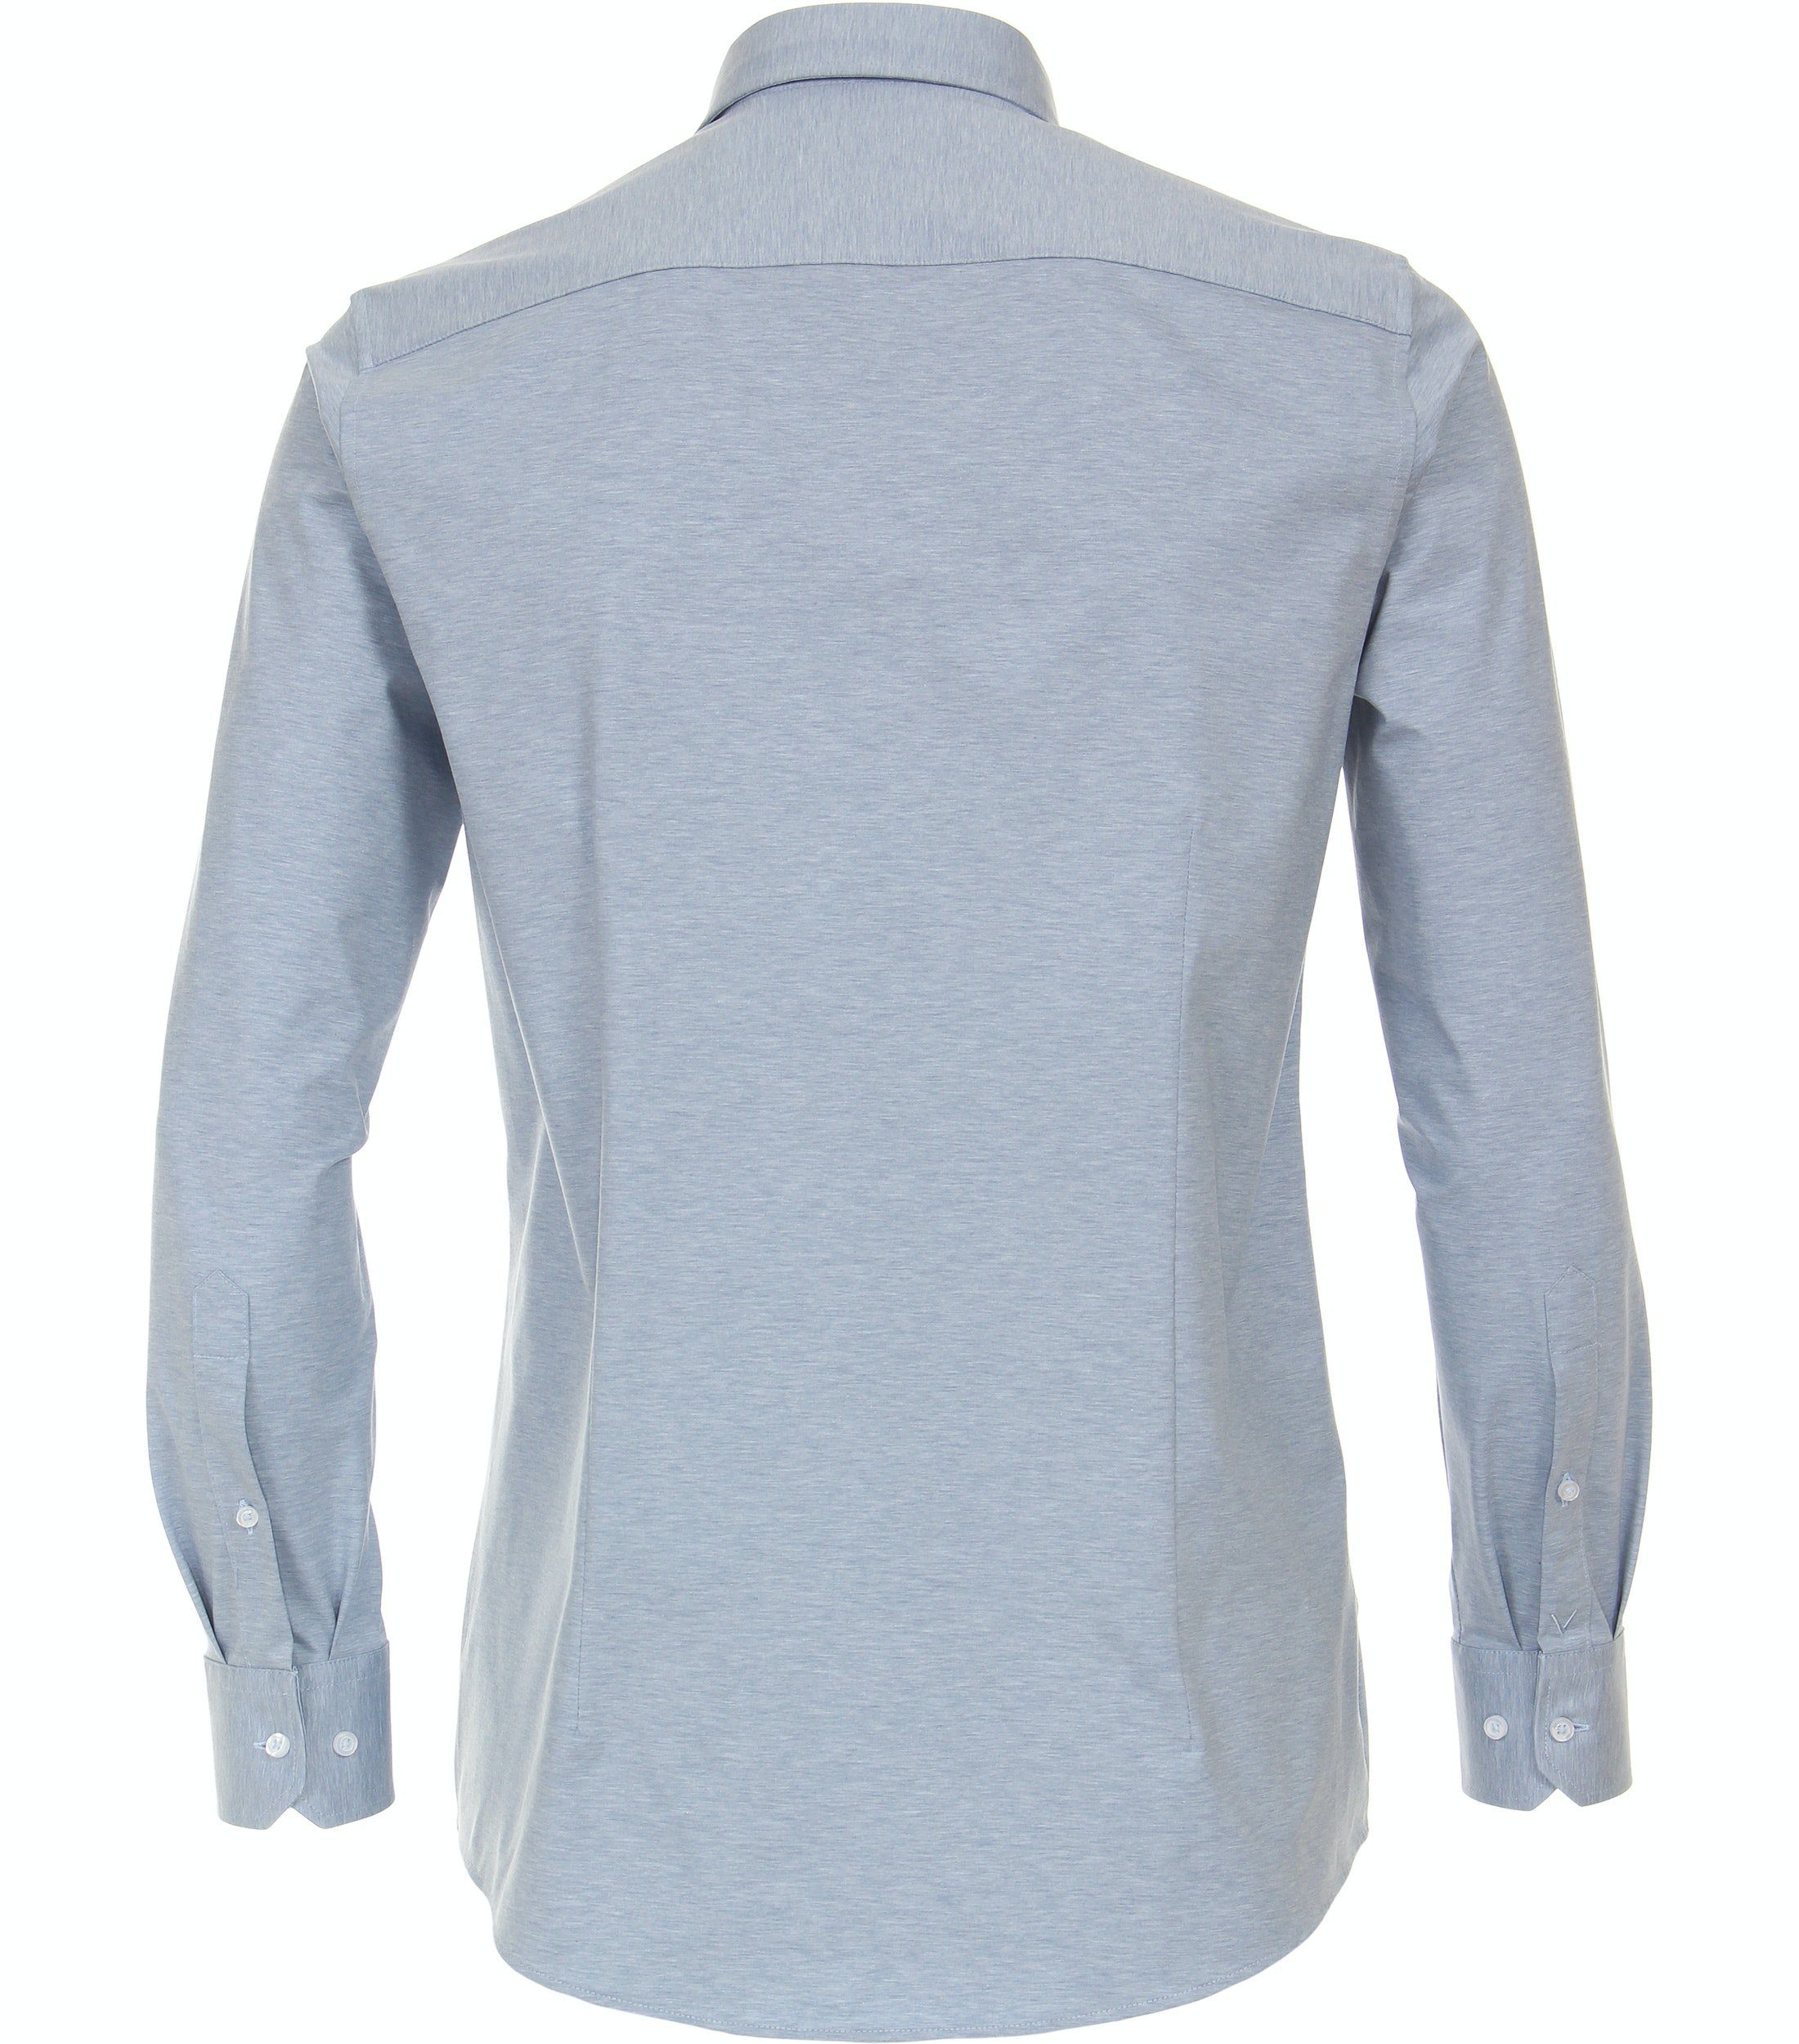 Jerseyhemd - Langarm Businesshemd Blau Einfarbig VENTI - (100) Hellblau Stretch - mit Fit - Modern